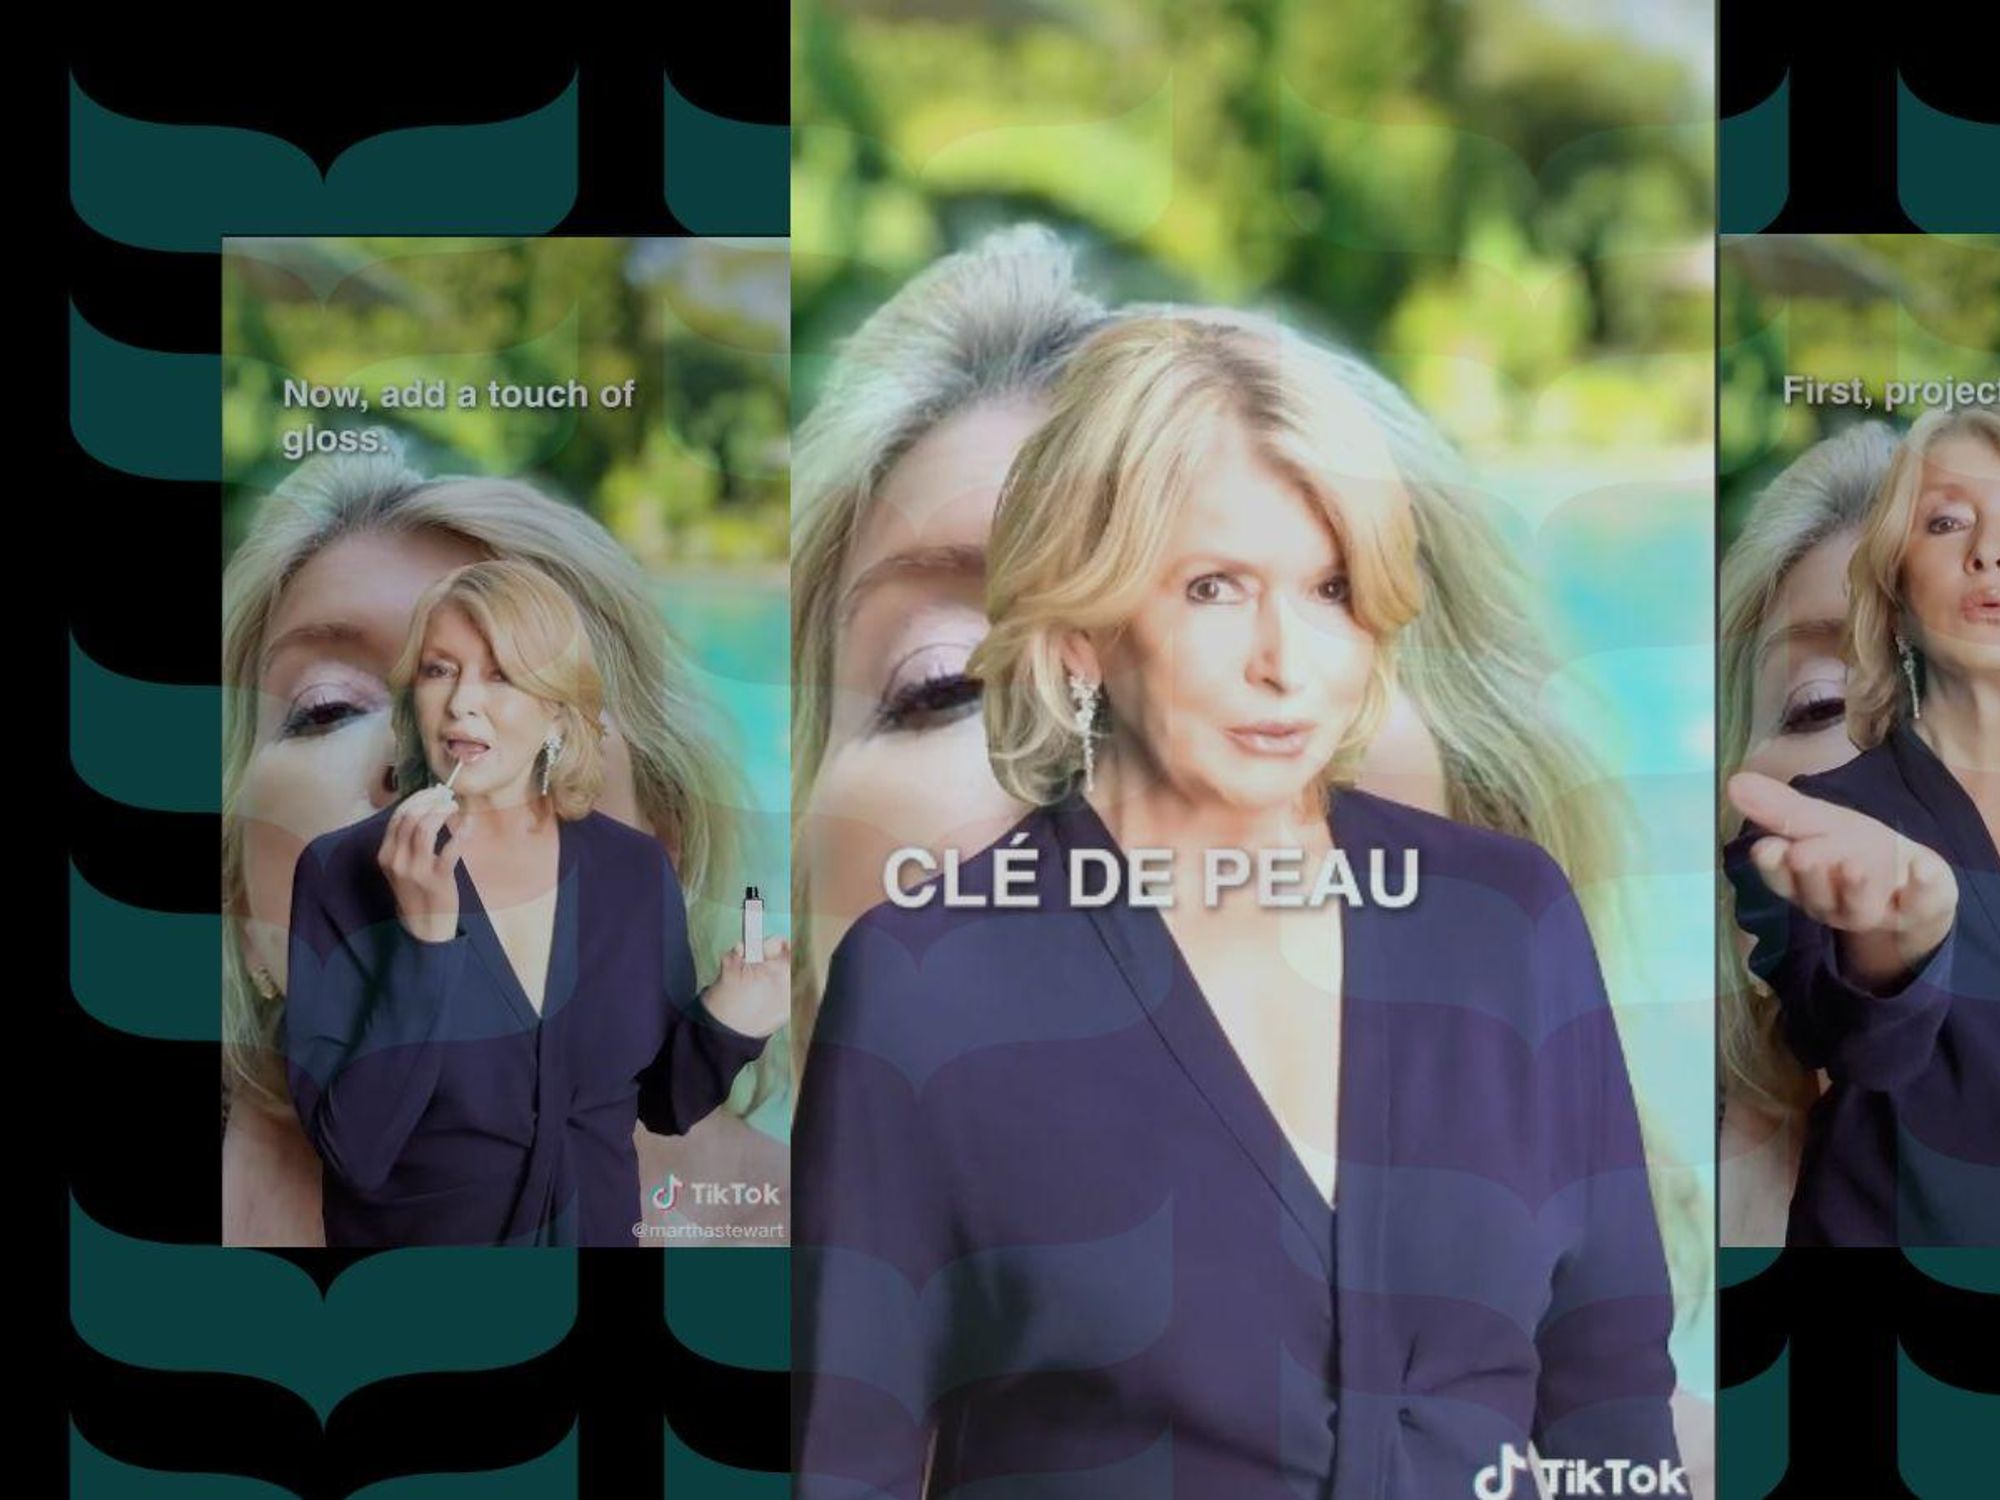 ​Martha Stewart in her Cle de peau campaign  on TikTok